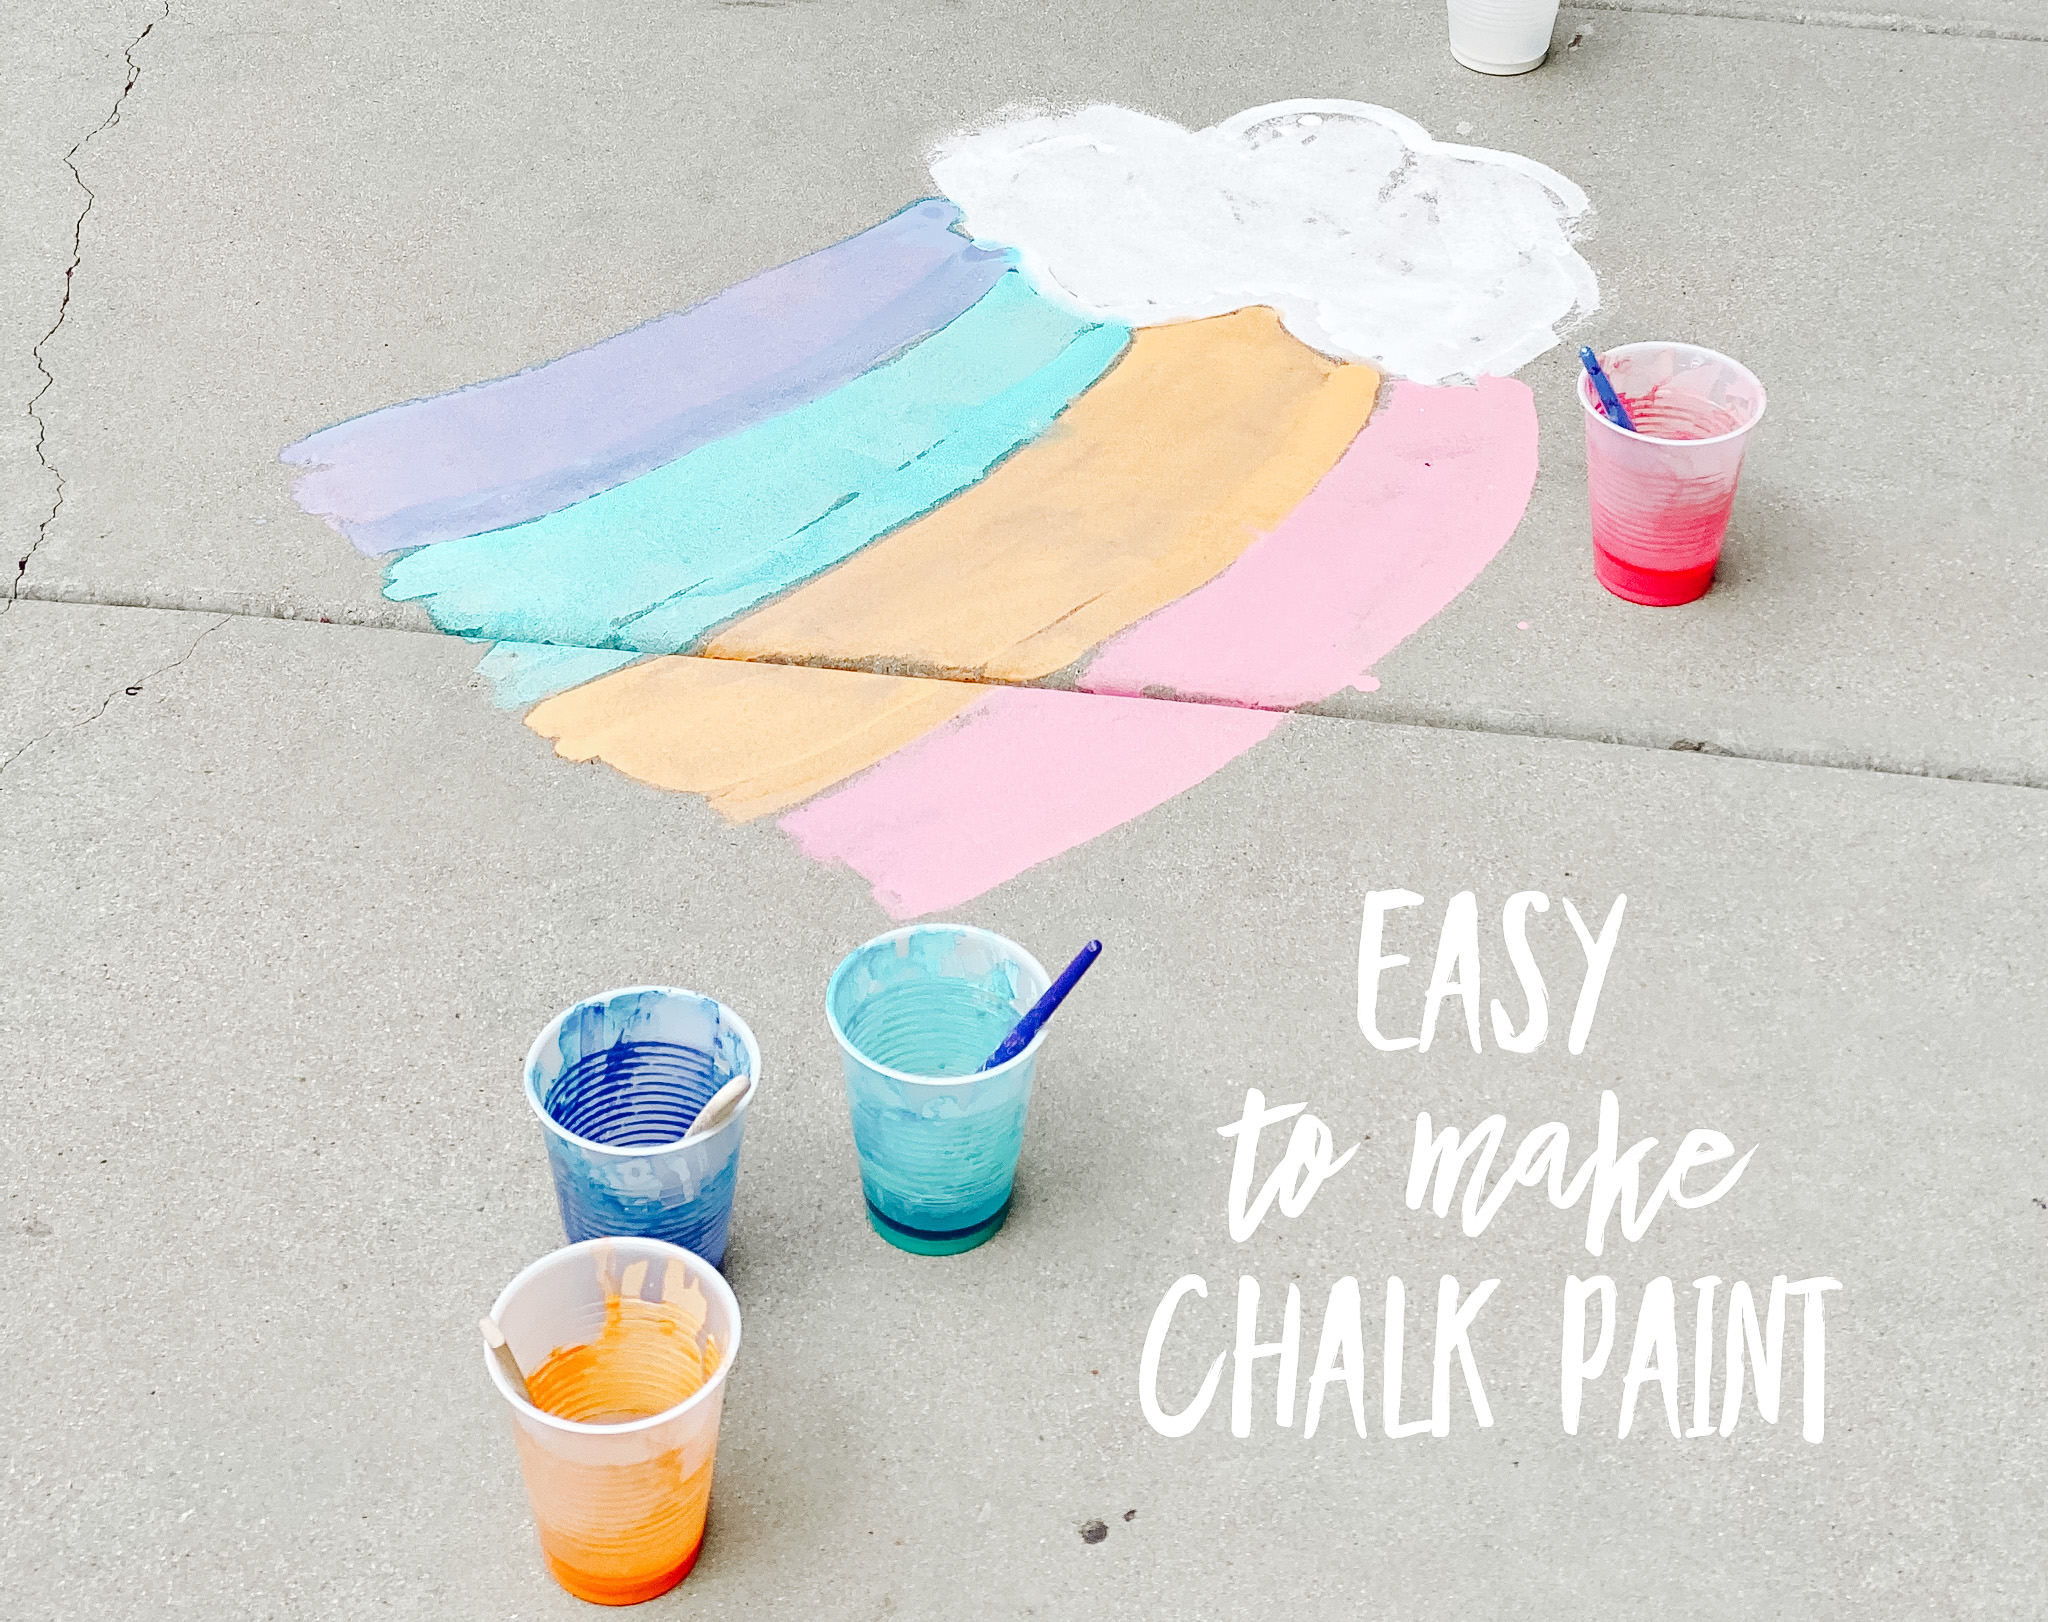 EASY, Vibrant Washable Sidewalk Chalk Paint for Kids